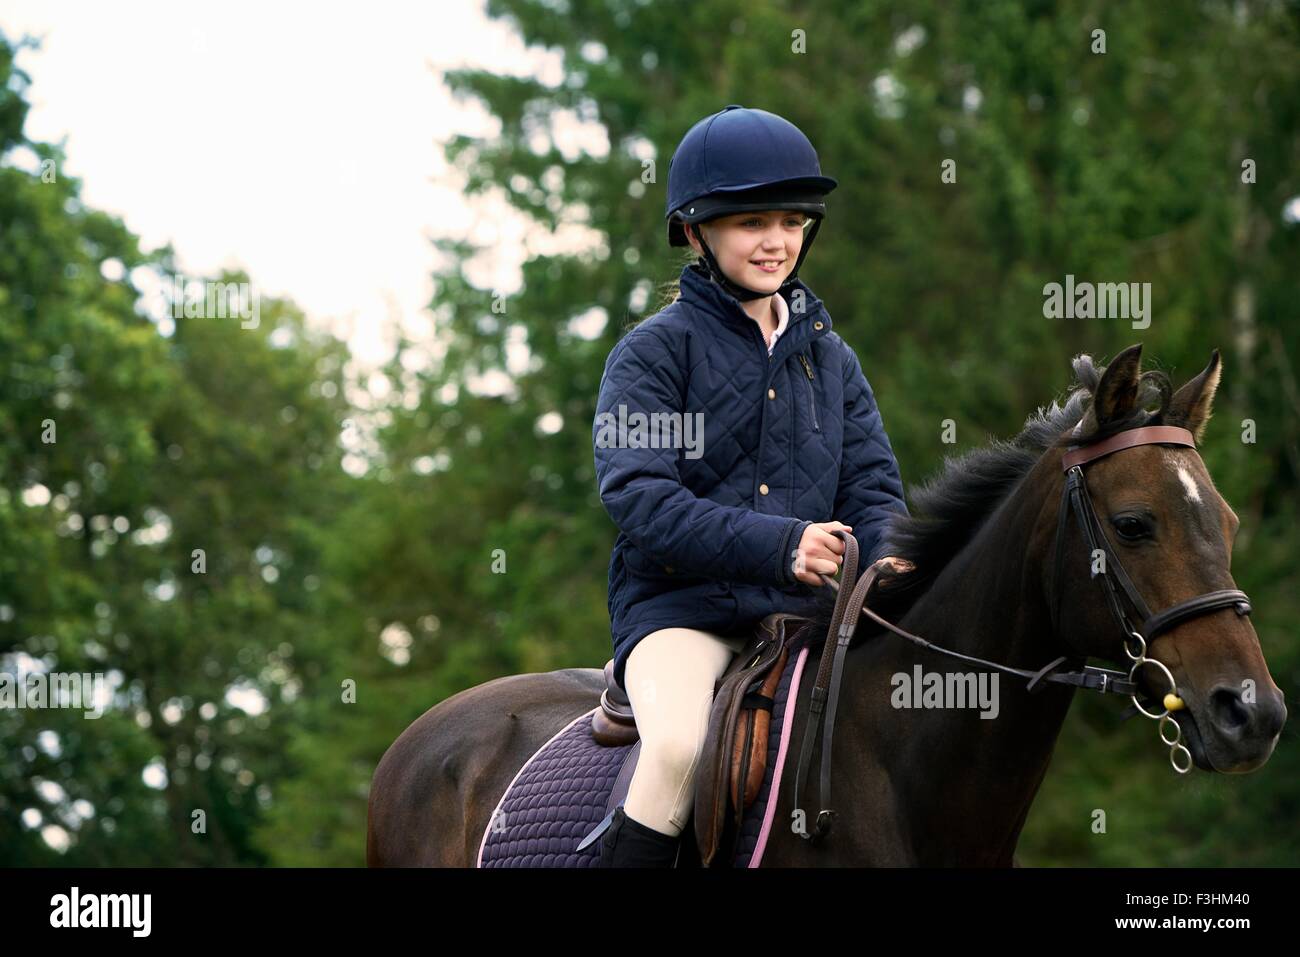 Girl horseback riding in countryside Stock Photo